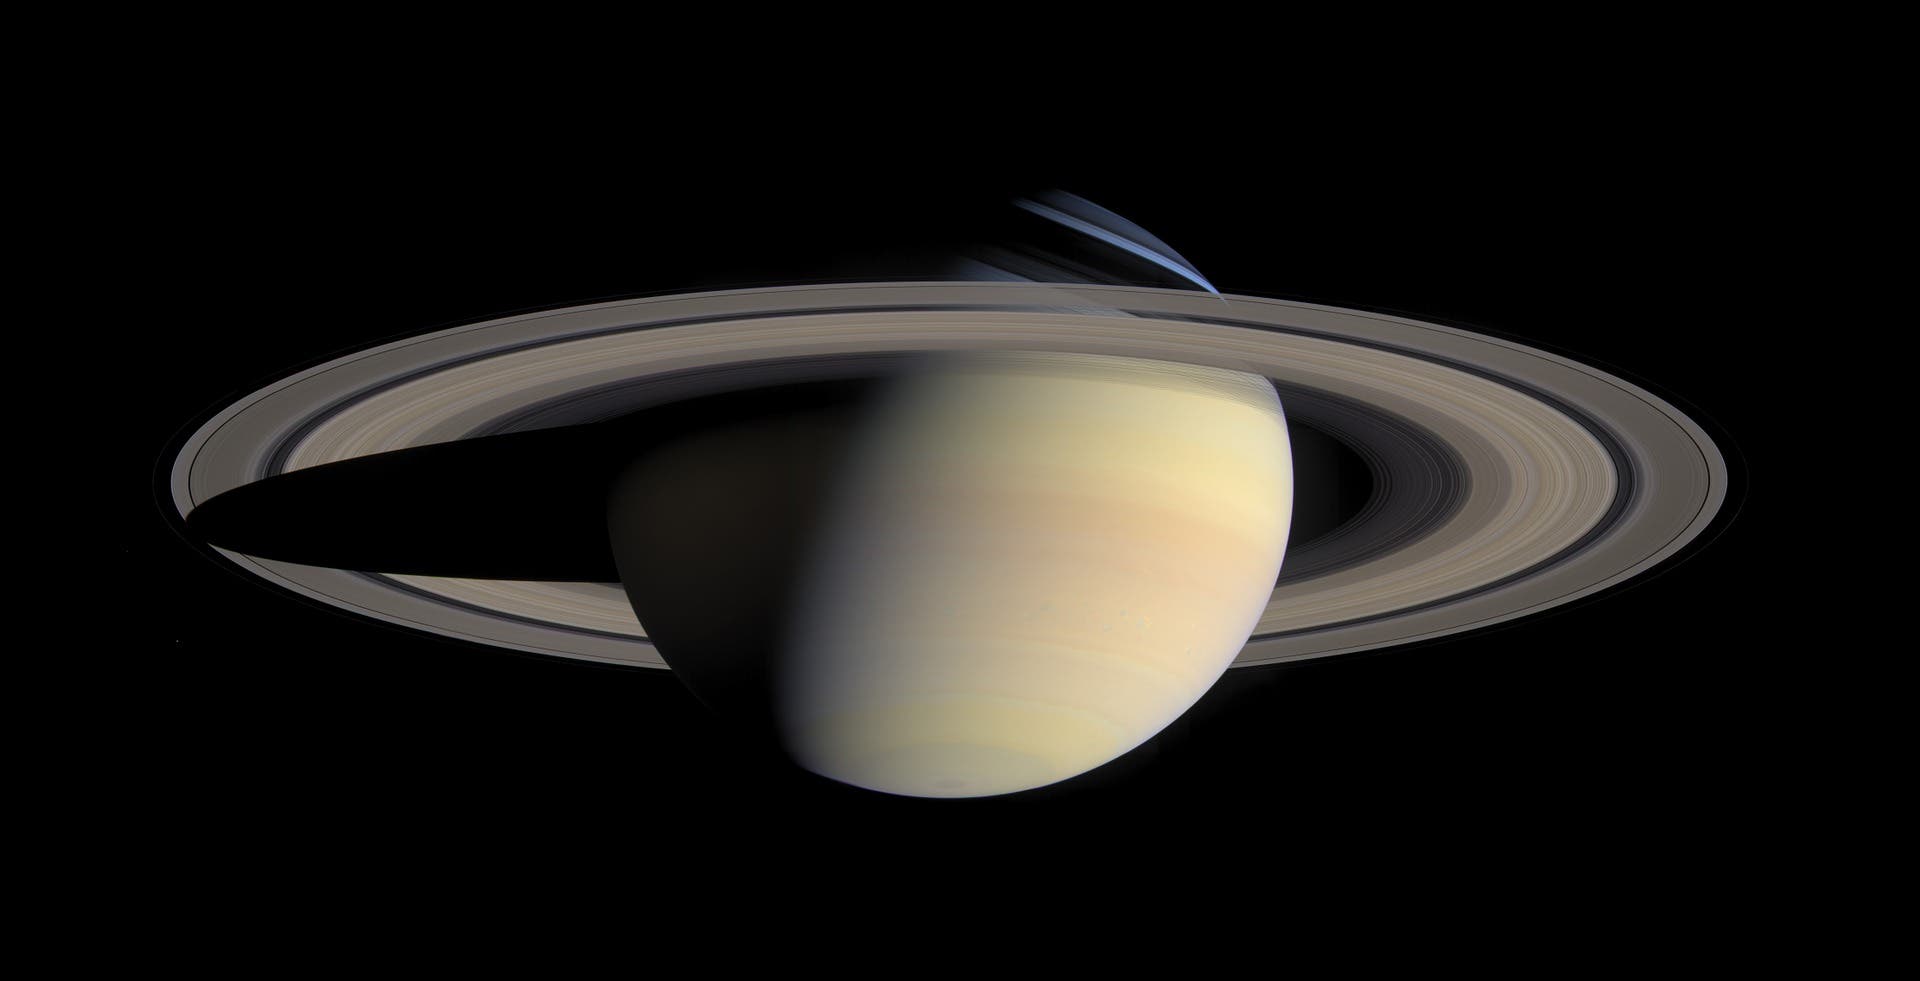 Saturn is tilted. 